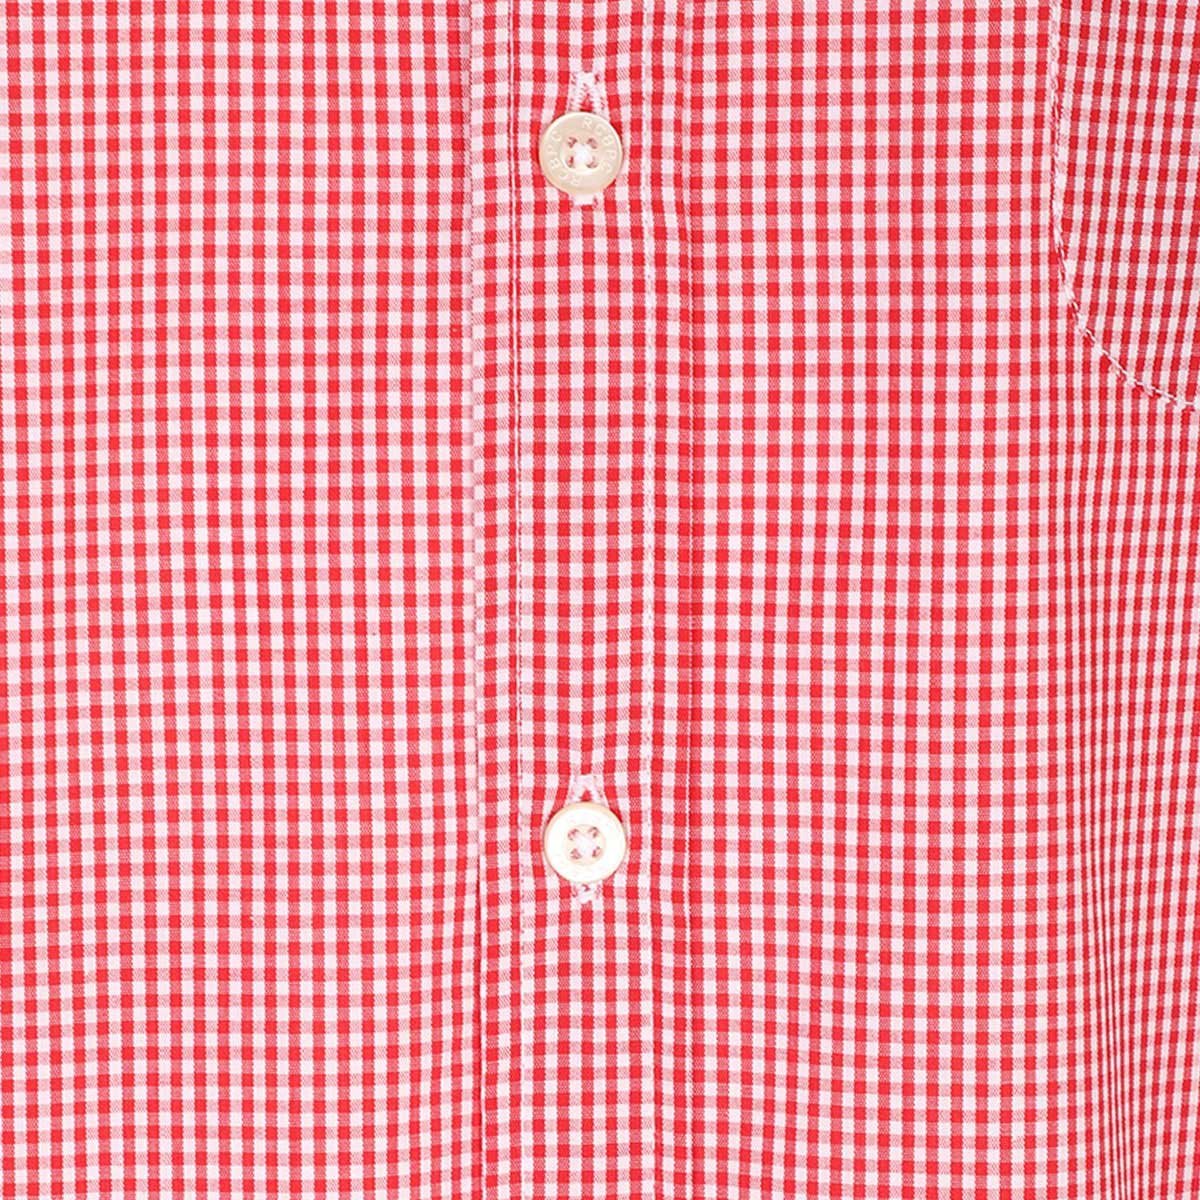 Camisa Talla Plus Manga Larga Cuadro Rojo Rcb Polo Club para Hombre